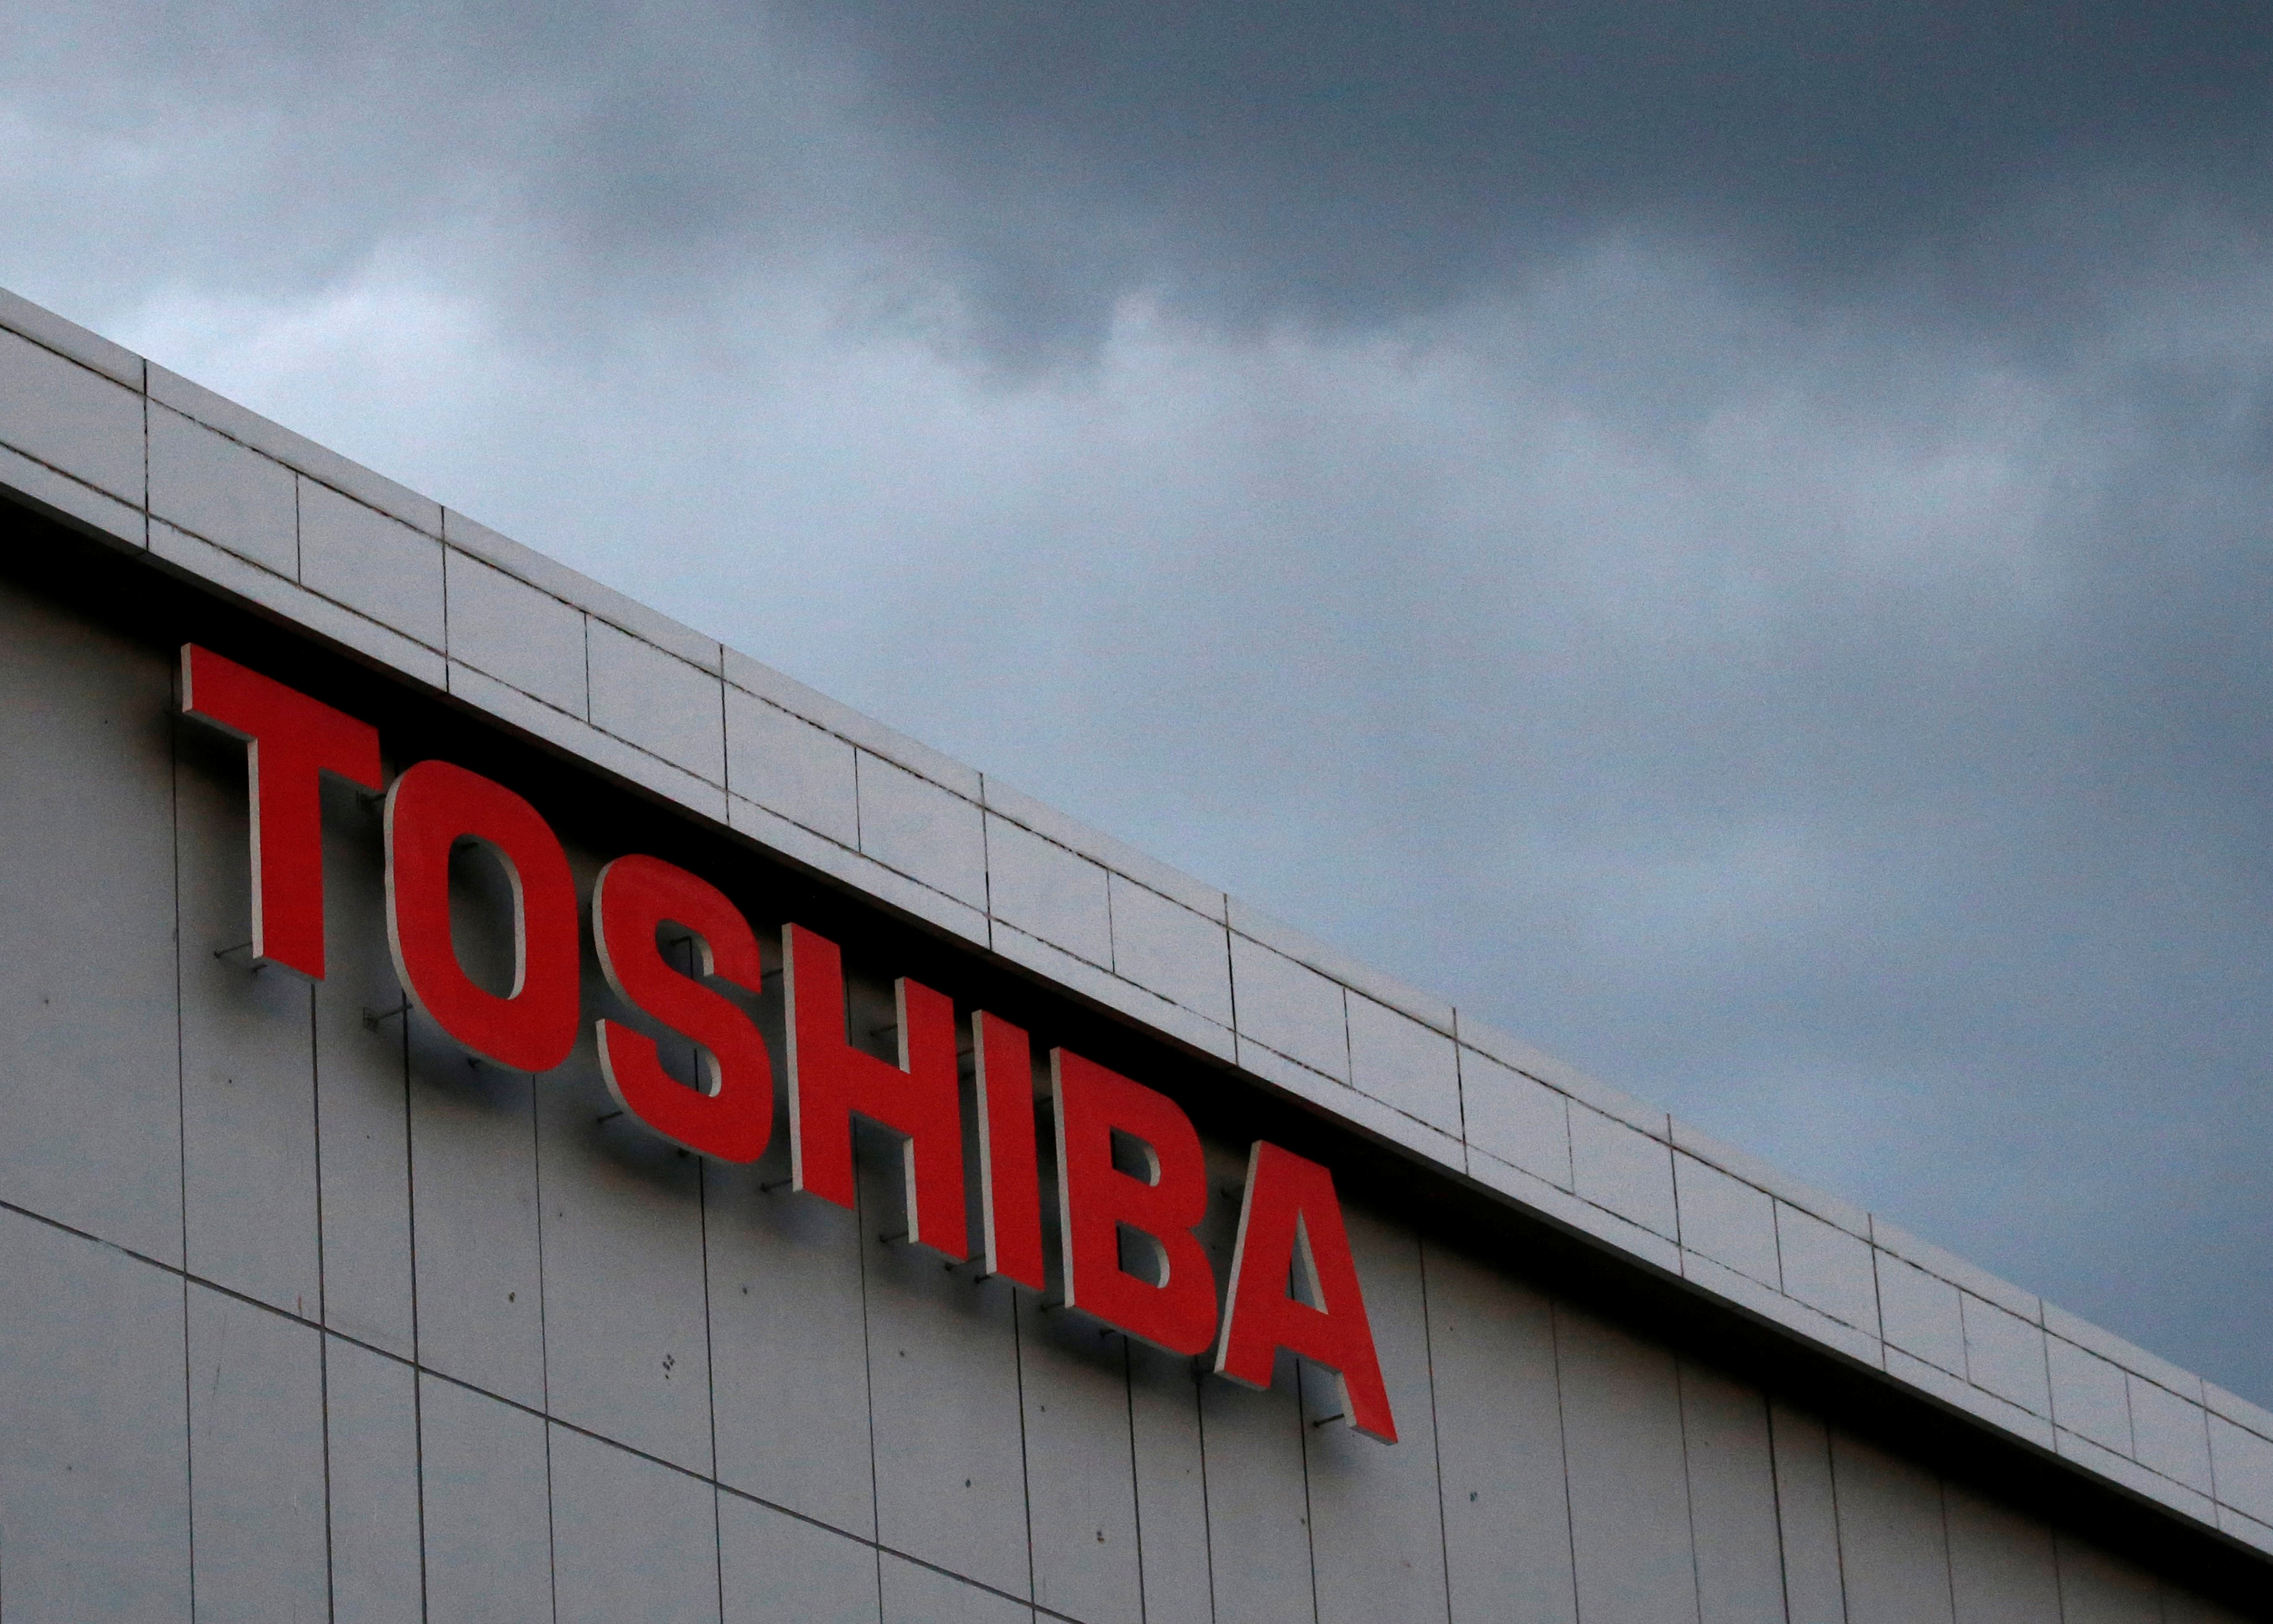 The logo of Toshiba Corp. is seen at the company's facility in Kawasaki, Japan